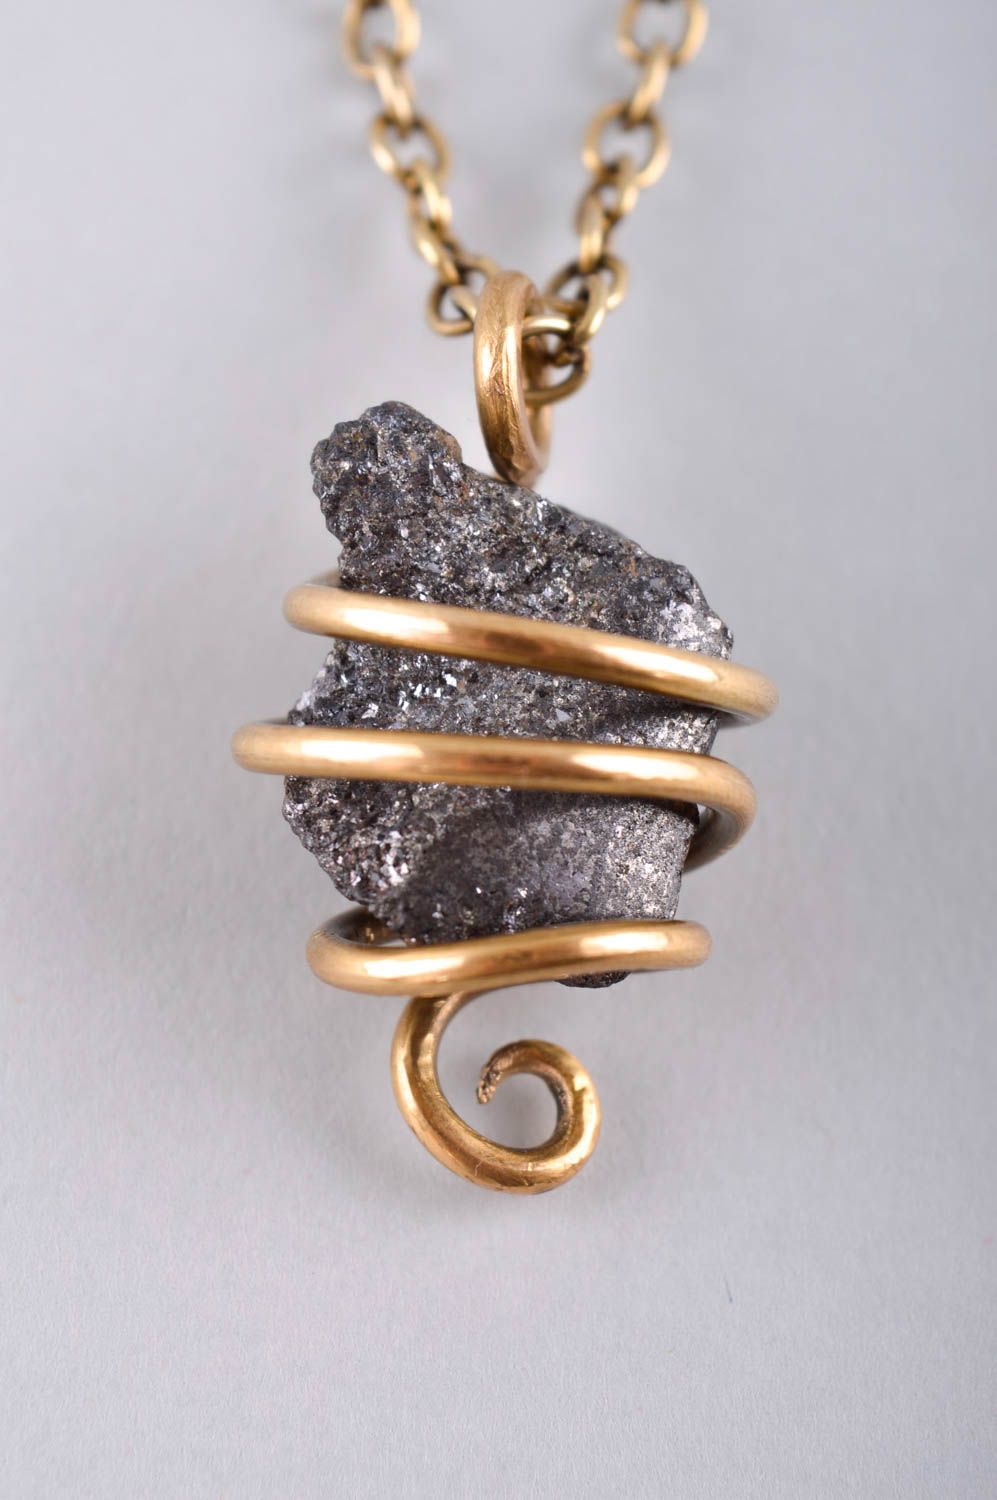 Handmade pendant unusual accessory metal jewelry gift ideas brass pendant photo 4